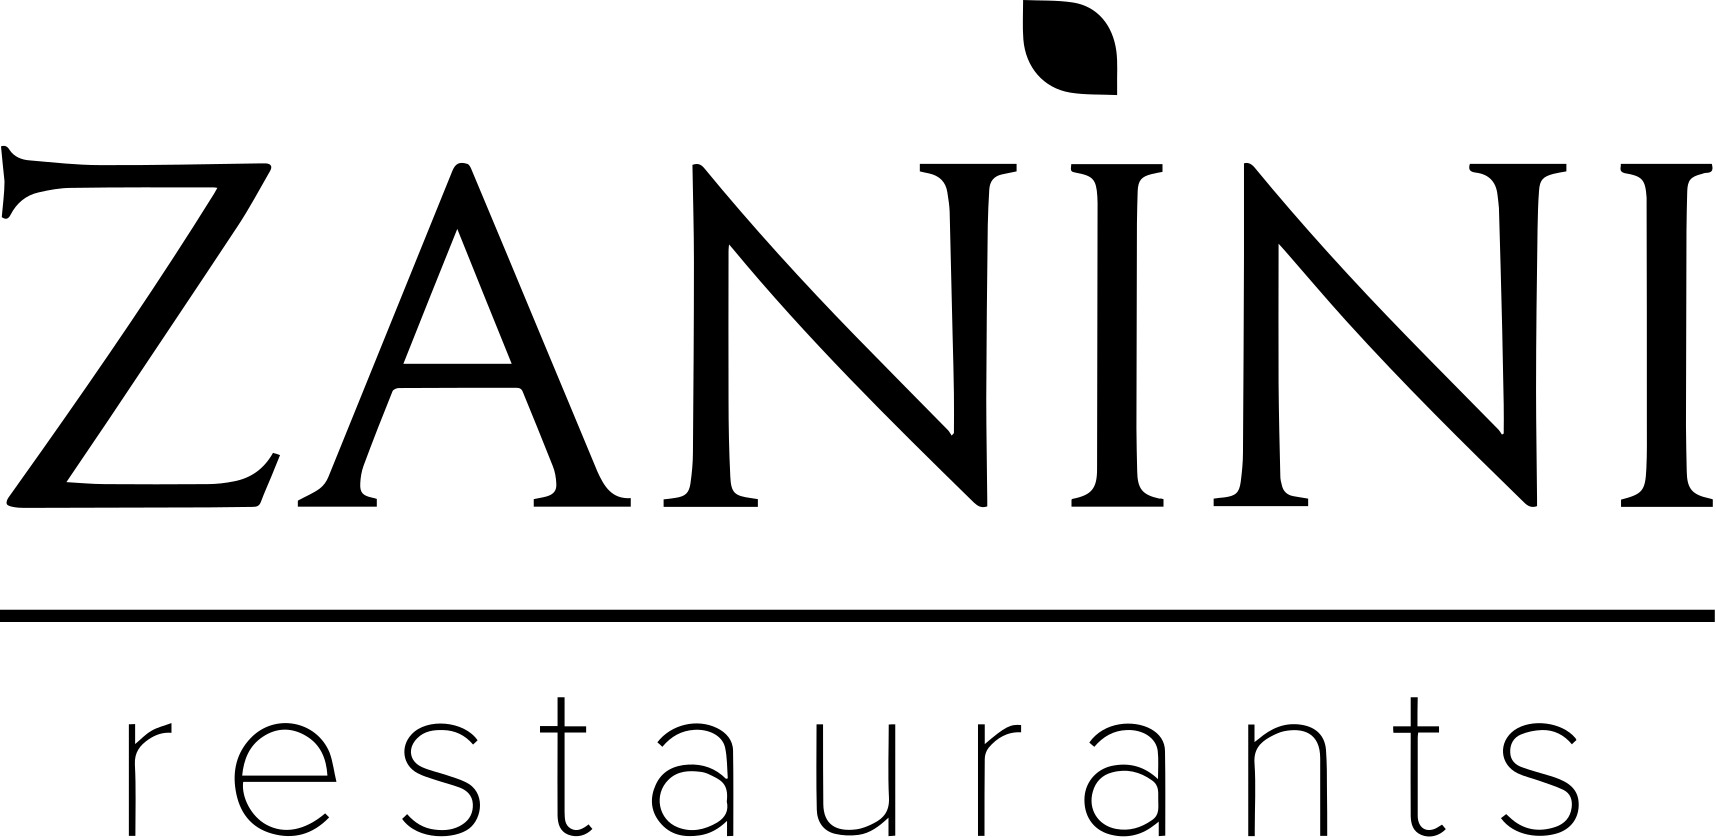 Zanini Restaurants